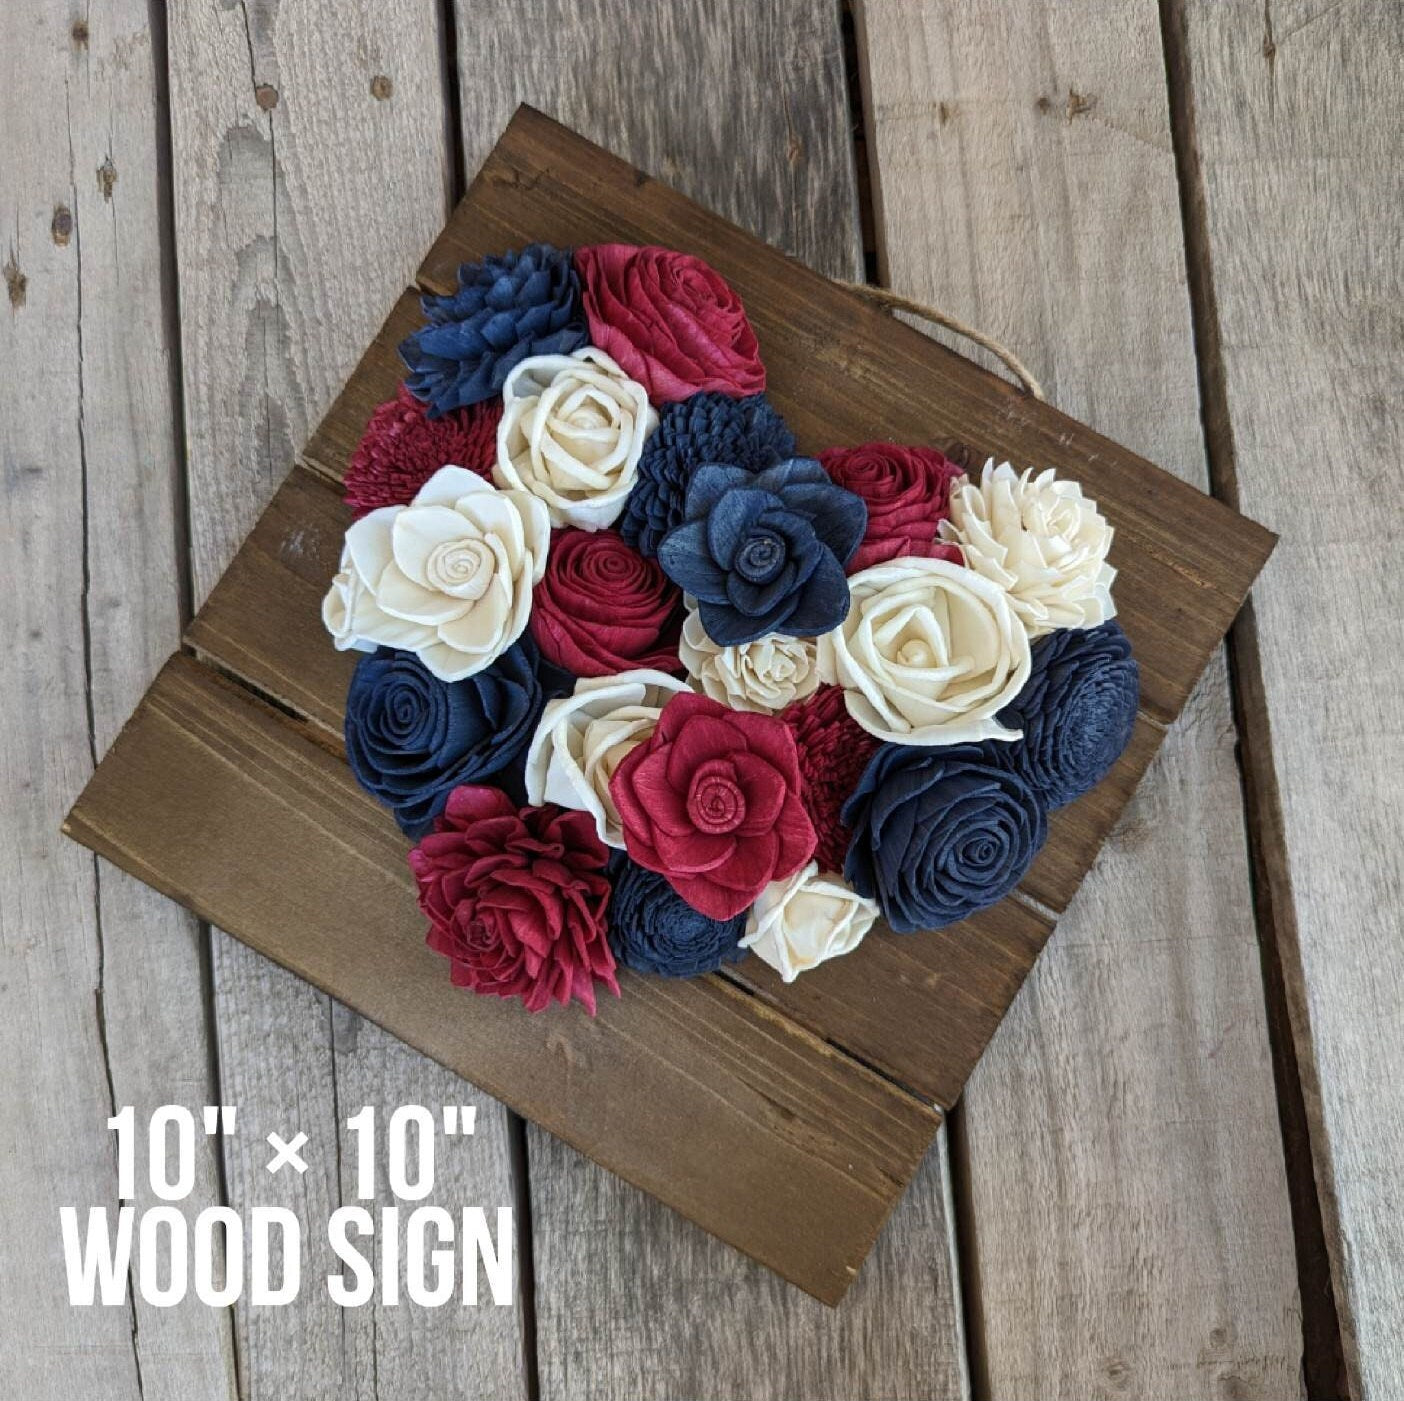 Wooden Flowers Arrangement, Wood Flower Heart Sign, 4th of July Home Decor, Hostess Gift, Patriotic Decor